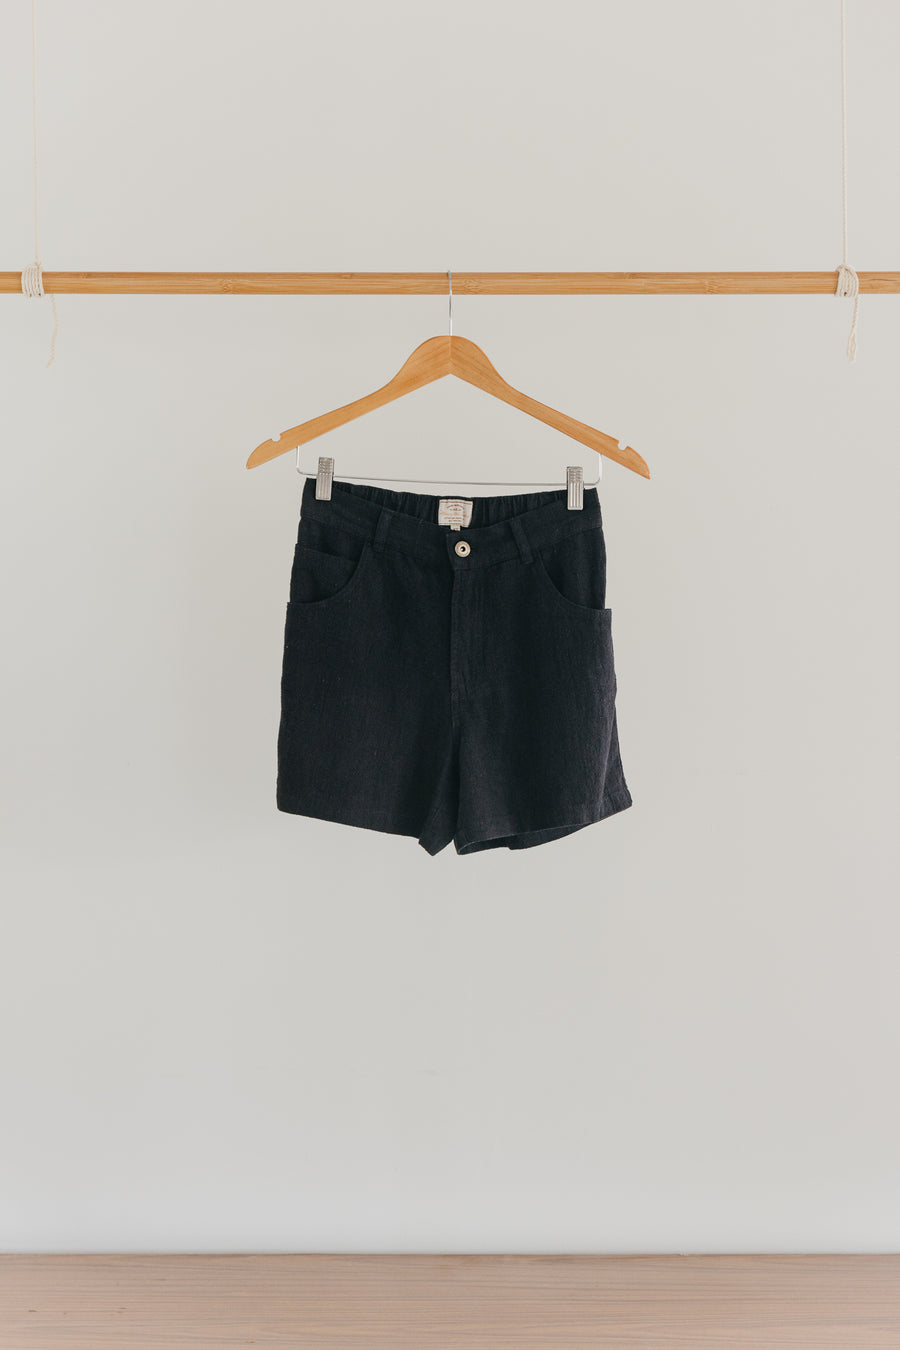 Miller Shorts- Unisex Textured Linen Shorts - Washed Black